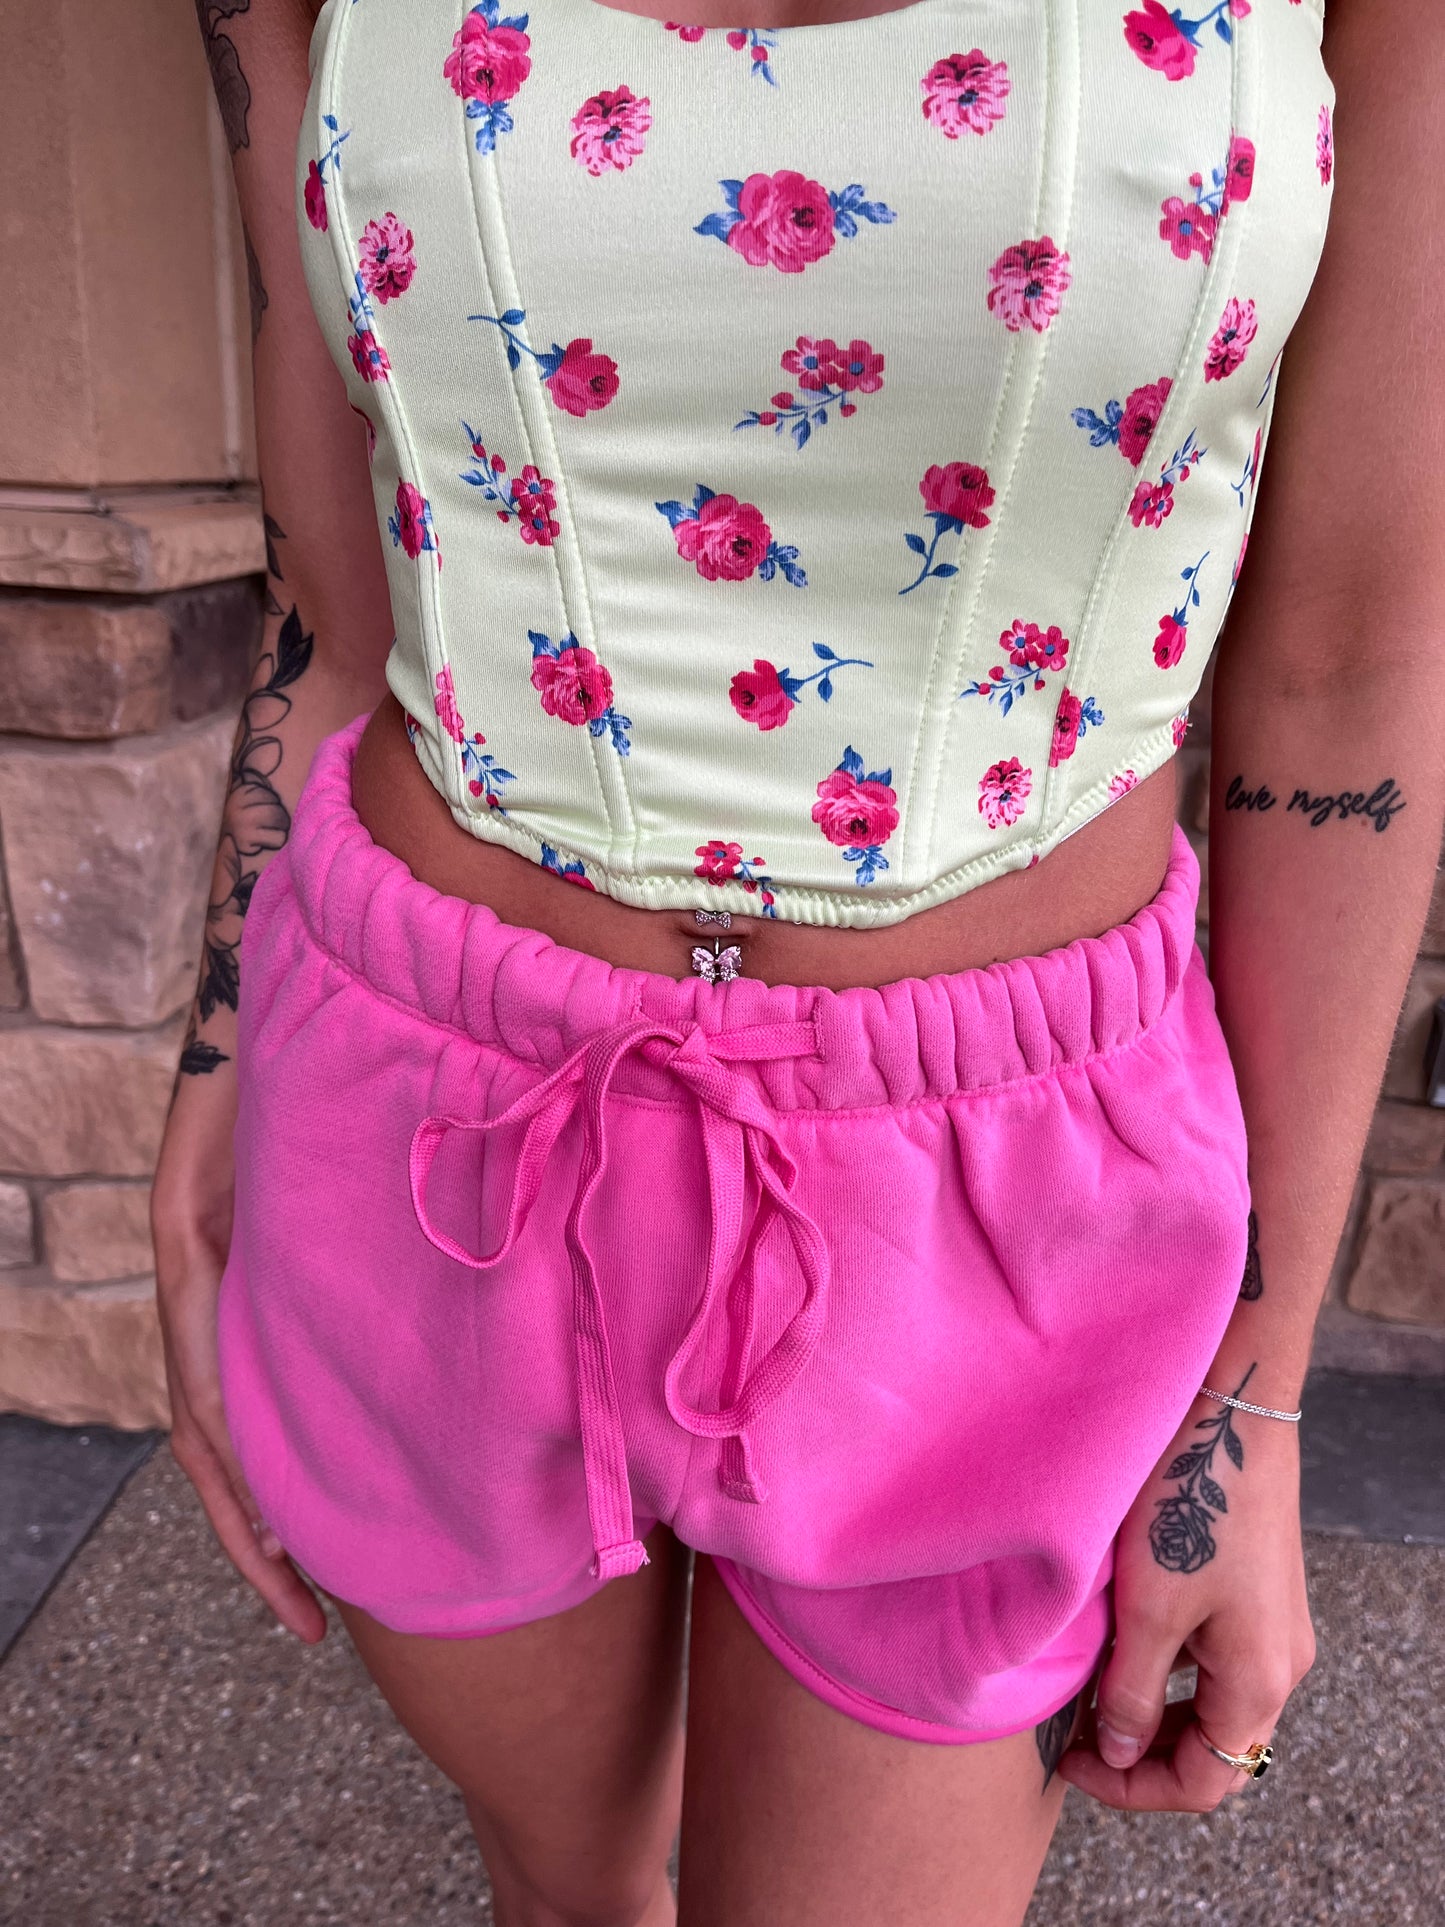 So Fetch Mini Shorts in Hot Pink